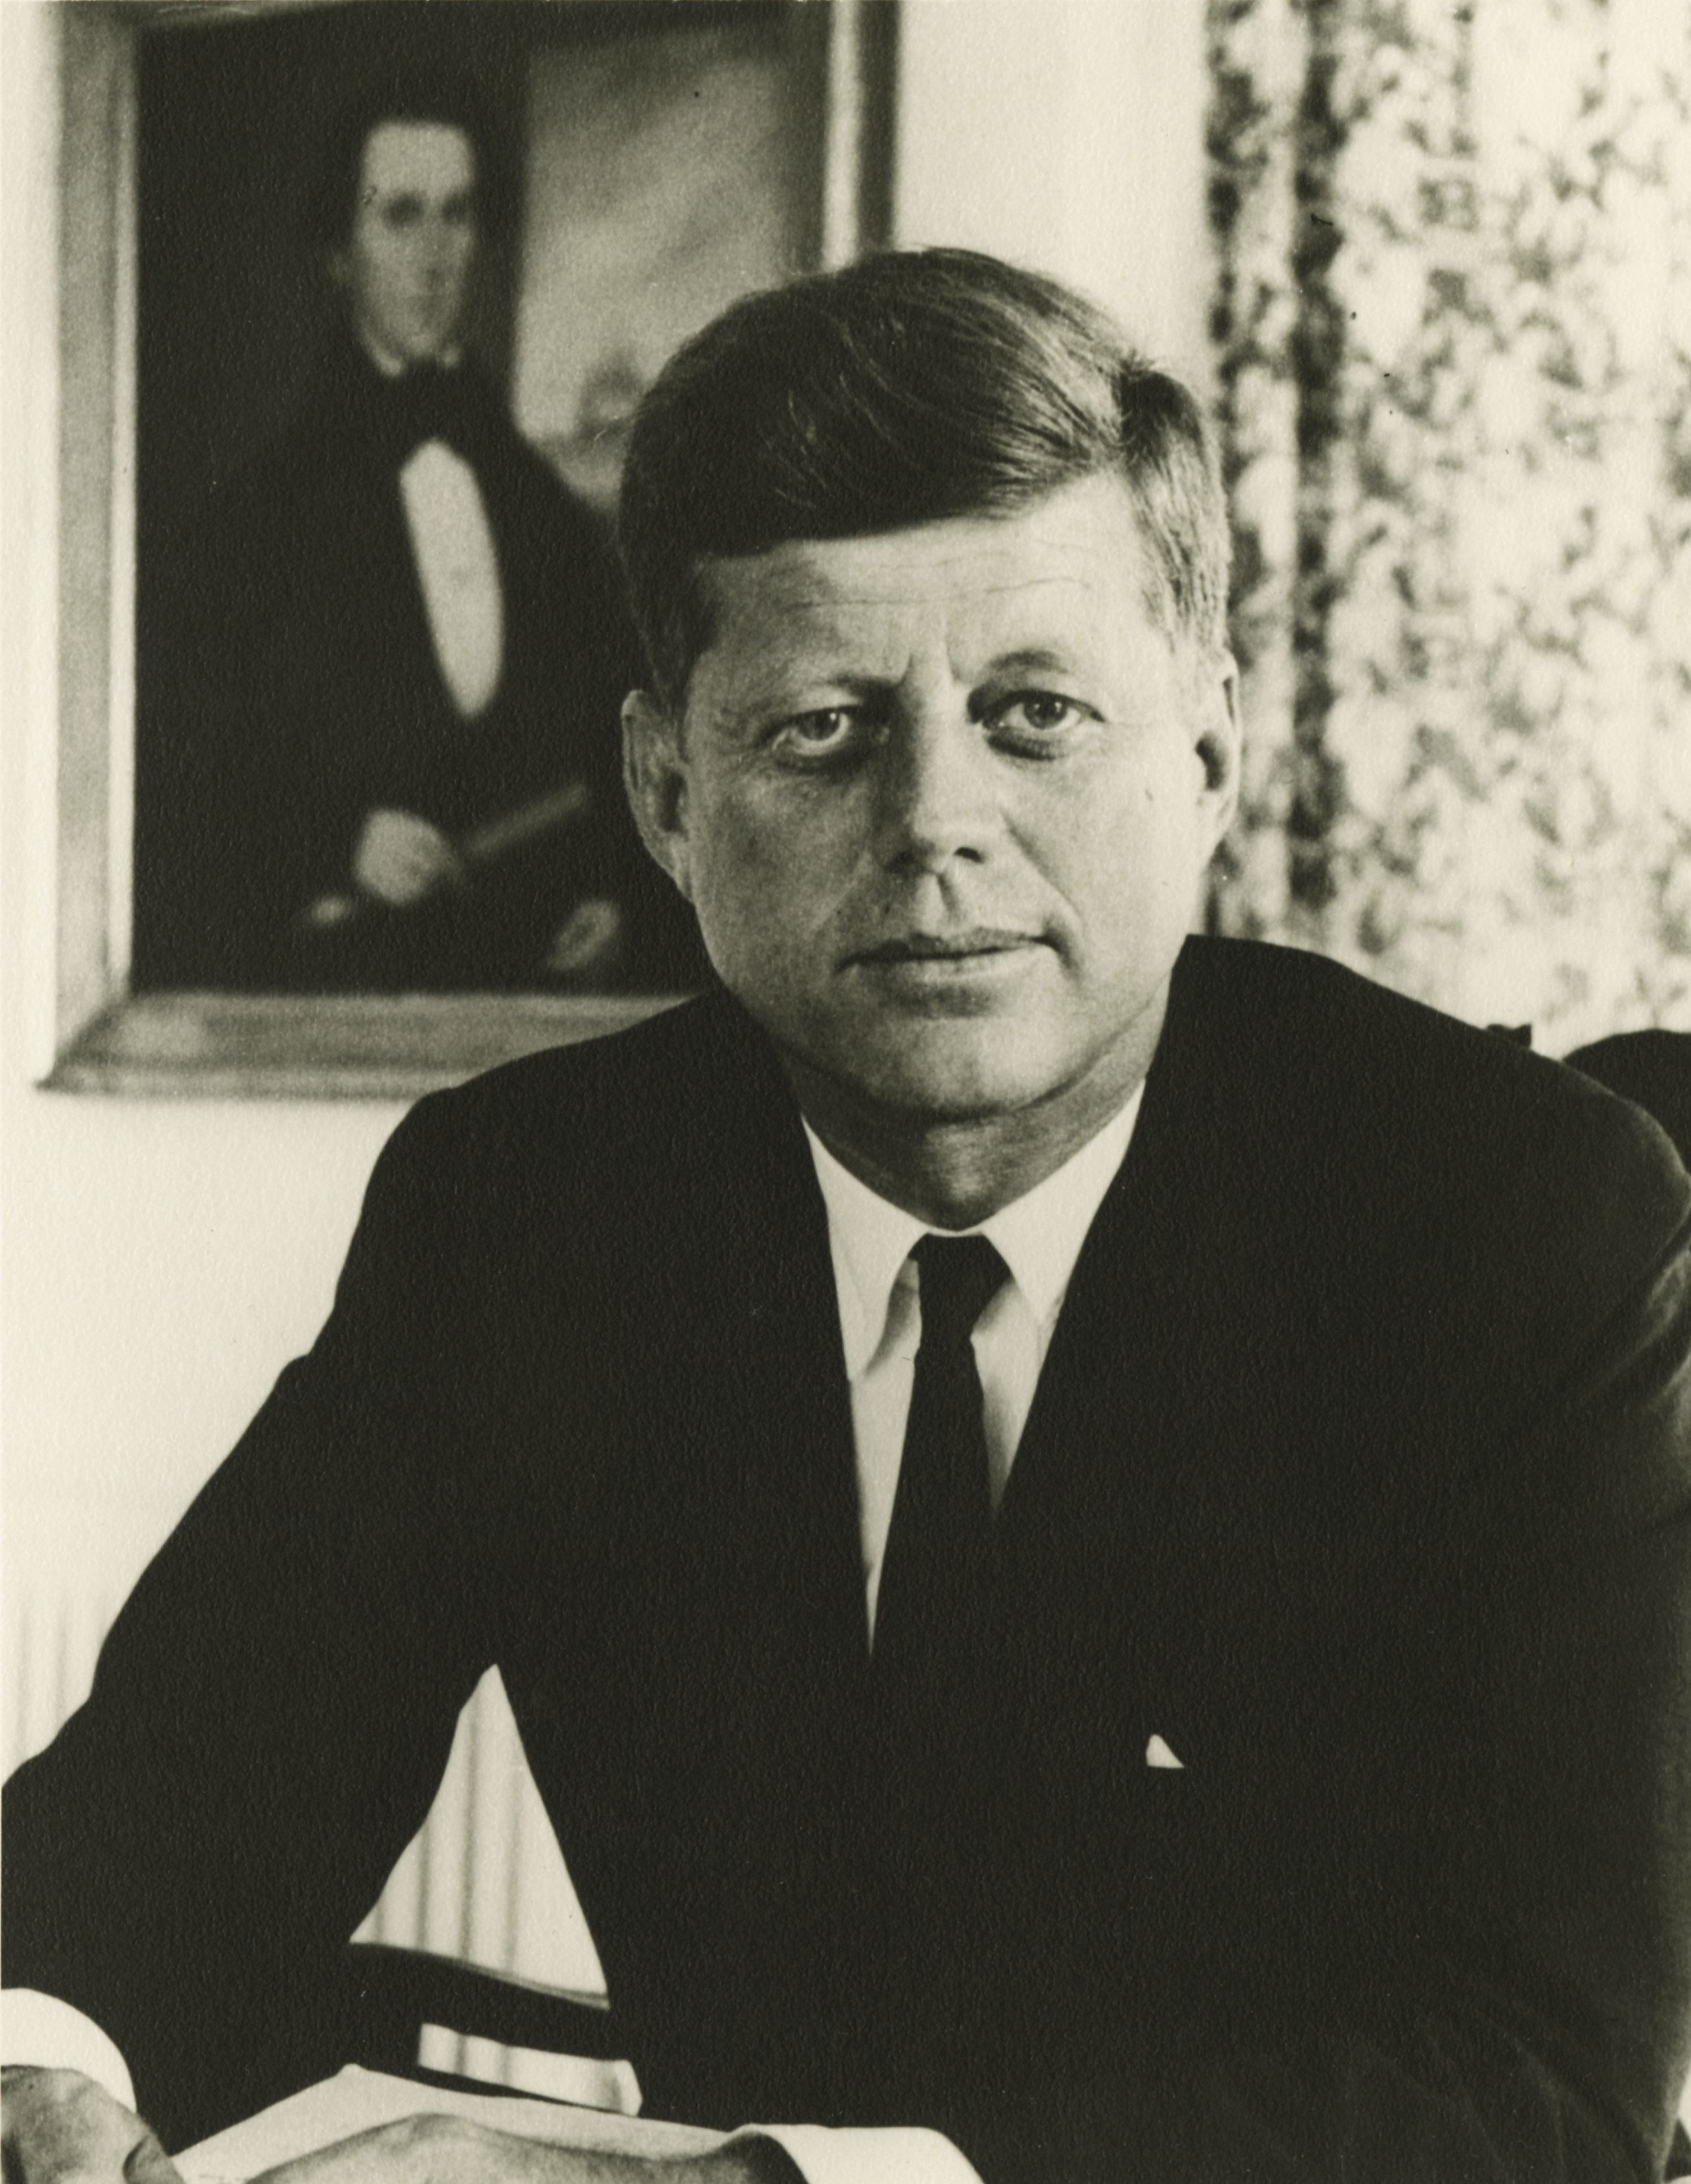 John F. Kennedy in the White House (Gilder Lehrman Institute, GLC09805.06)